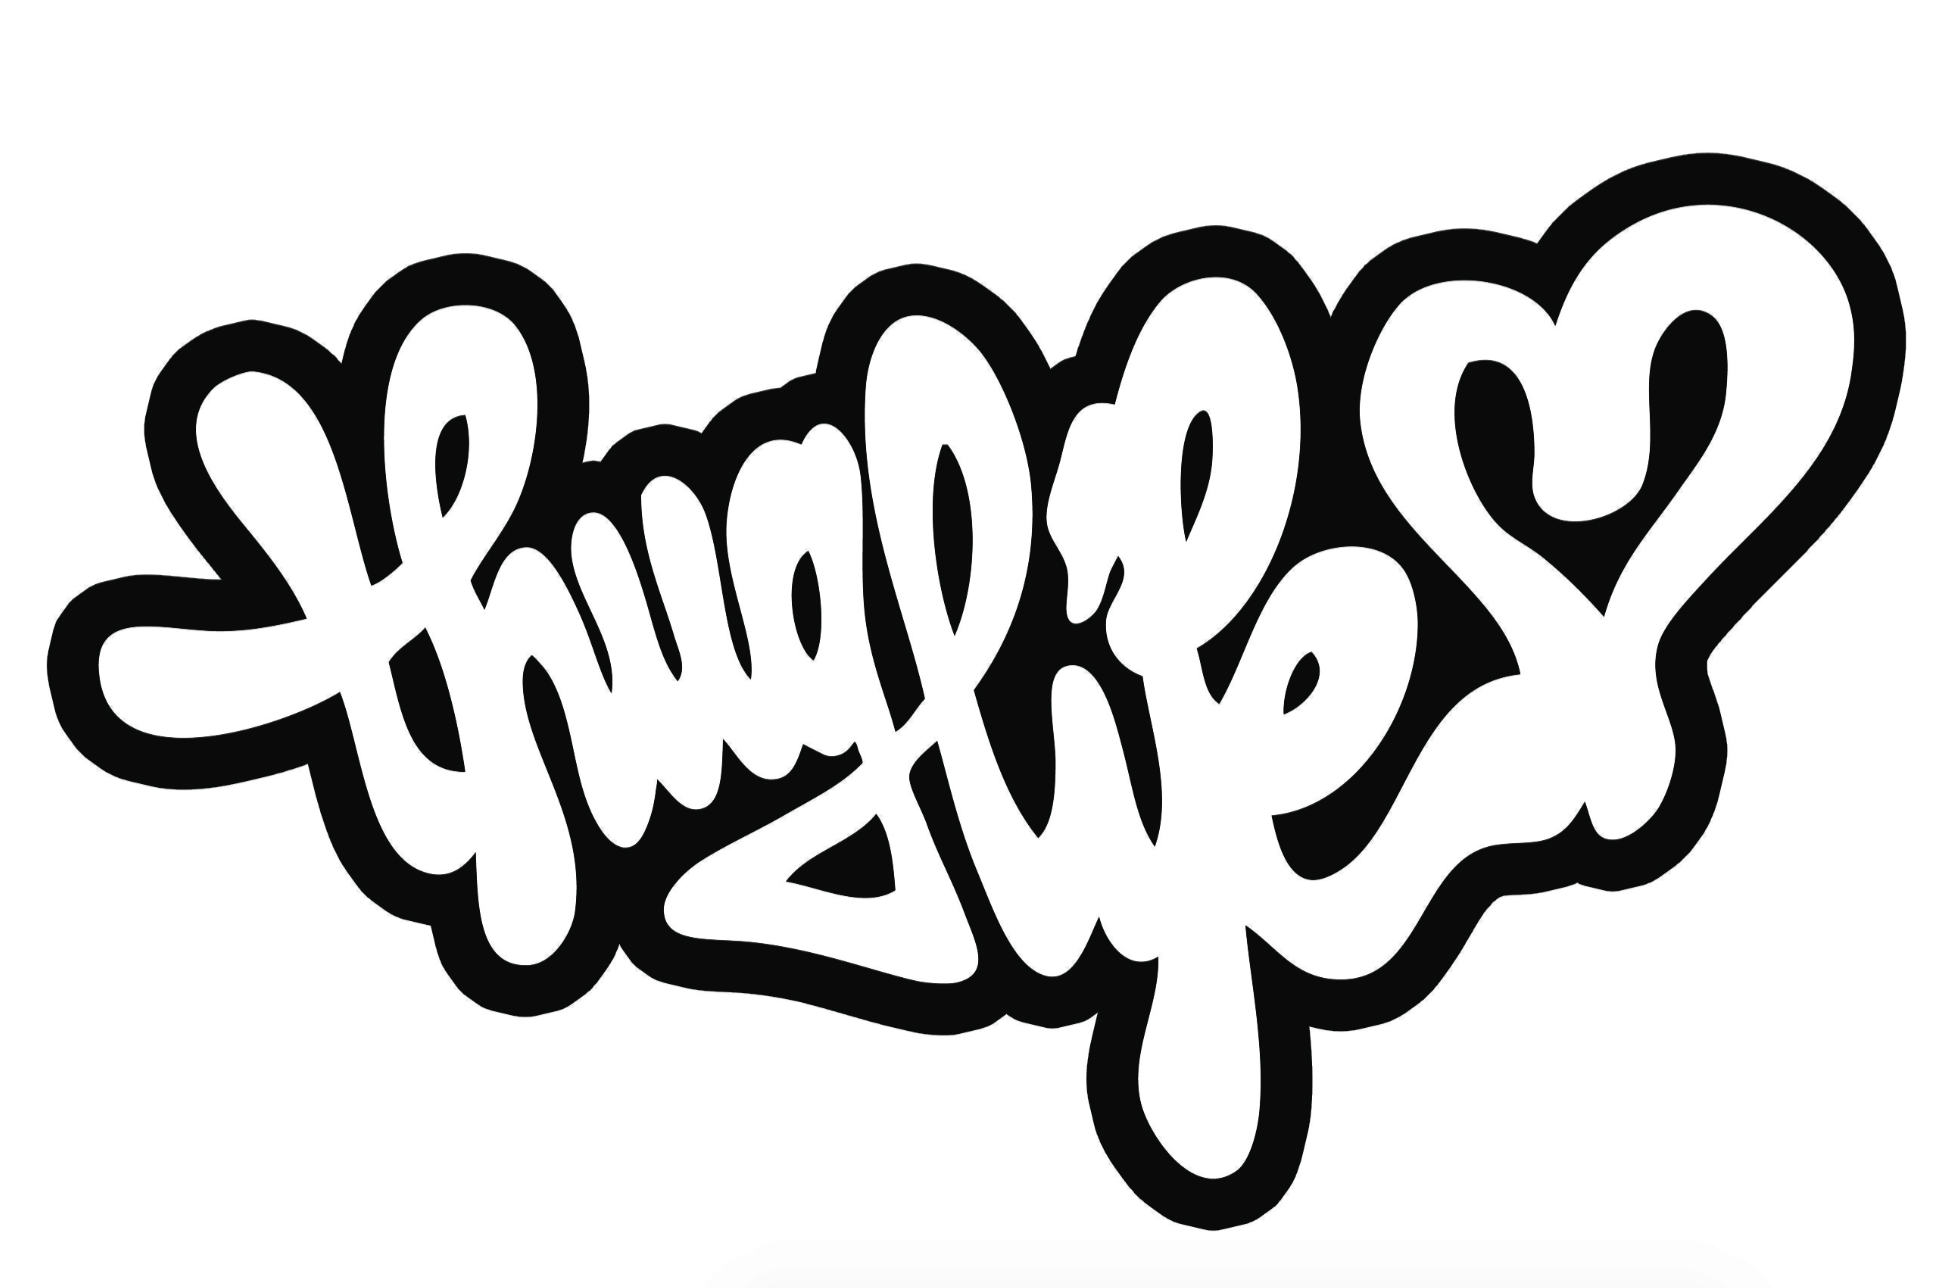 bebar thuglife magazine logo